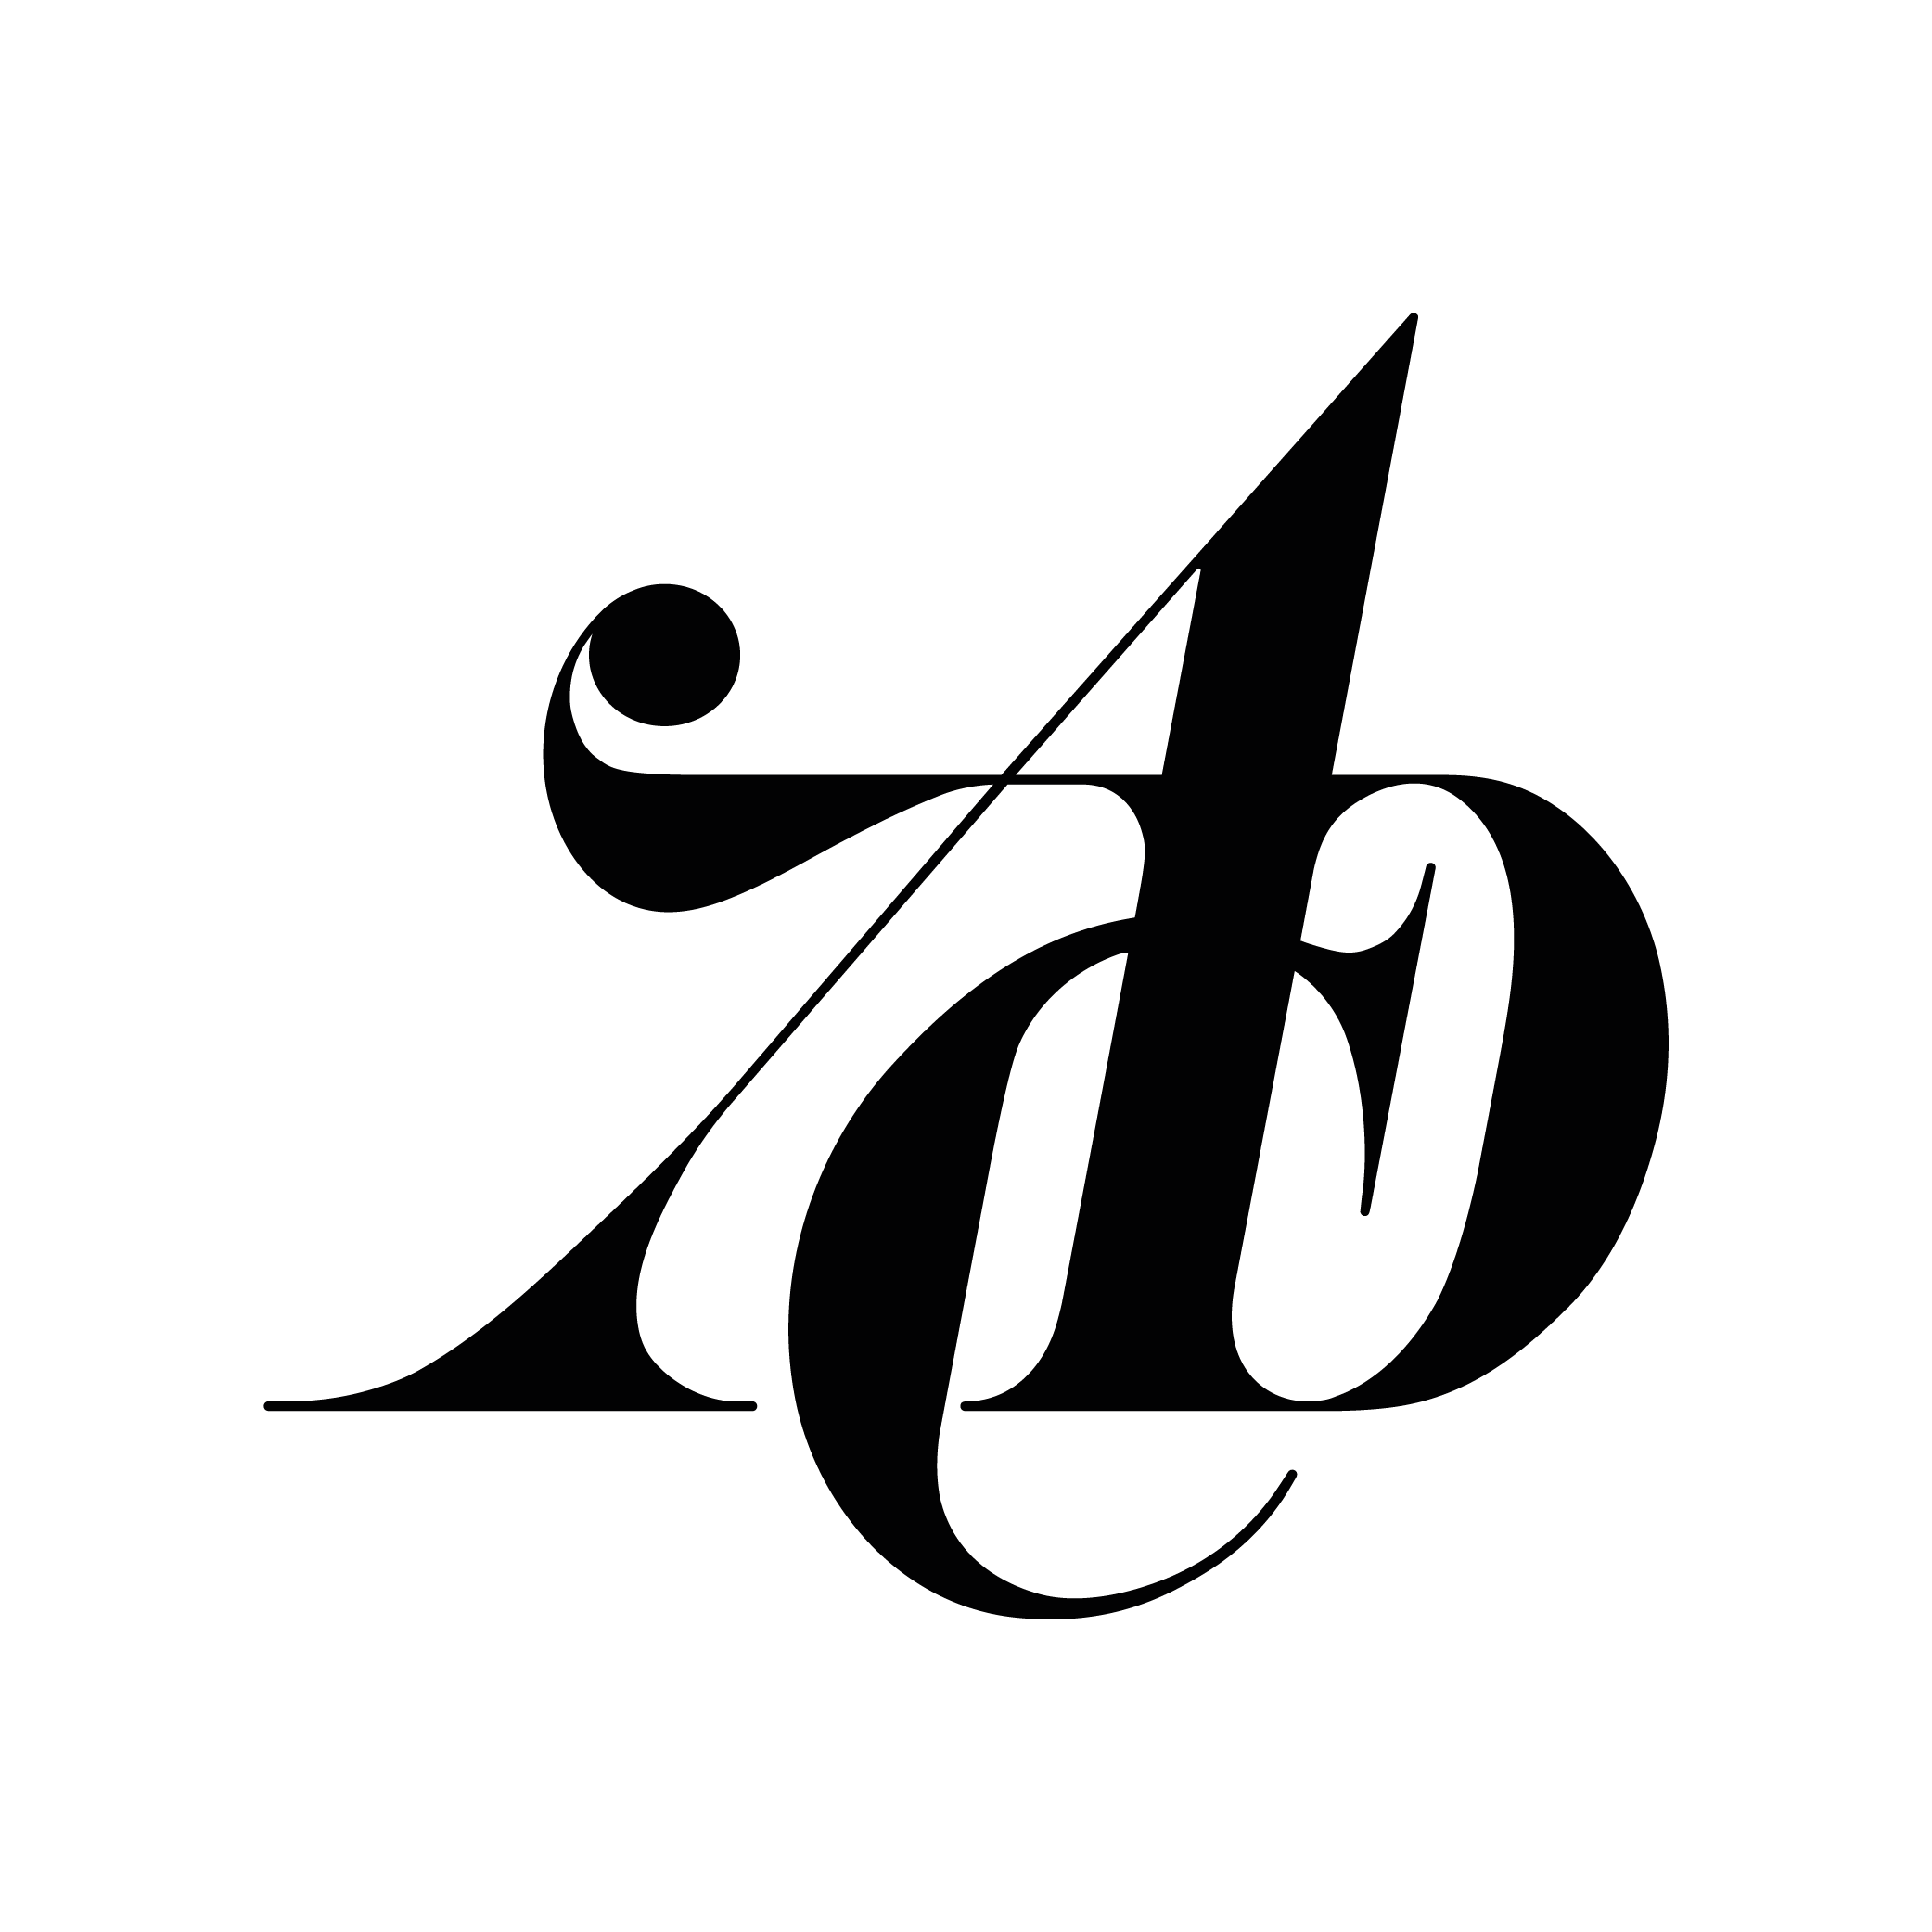 Logo ACD Art Directors Club